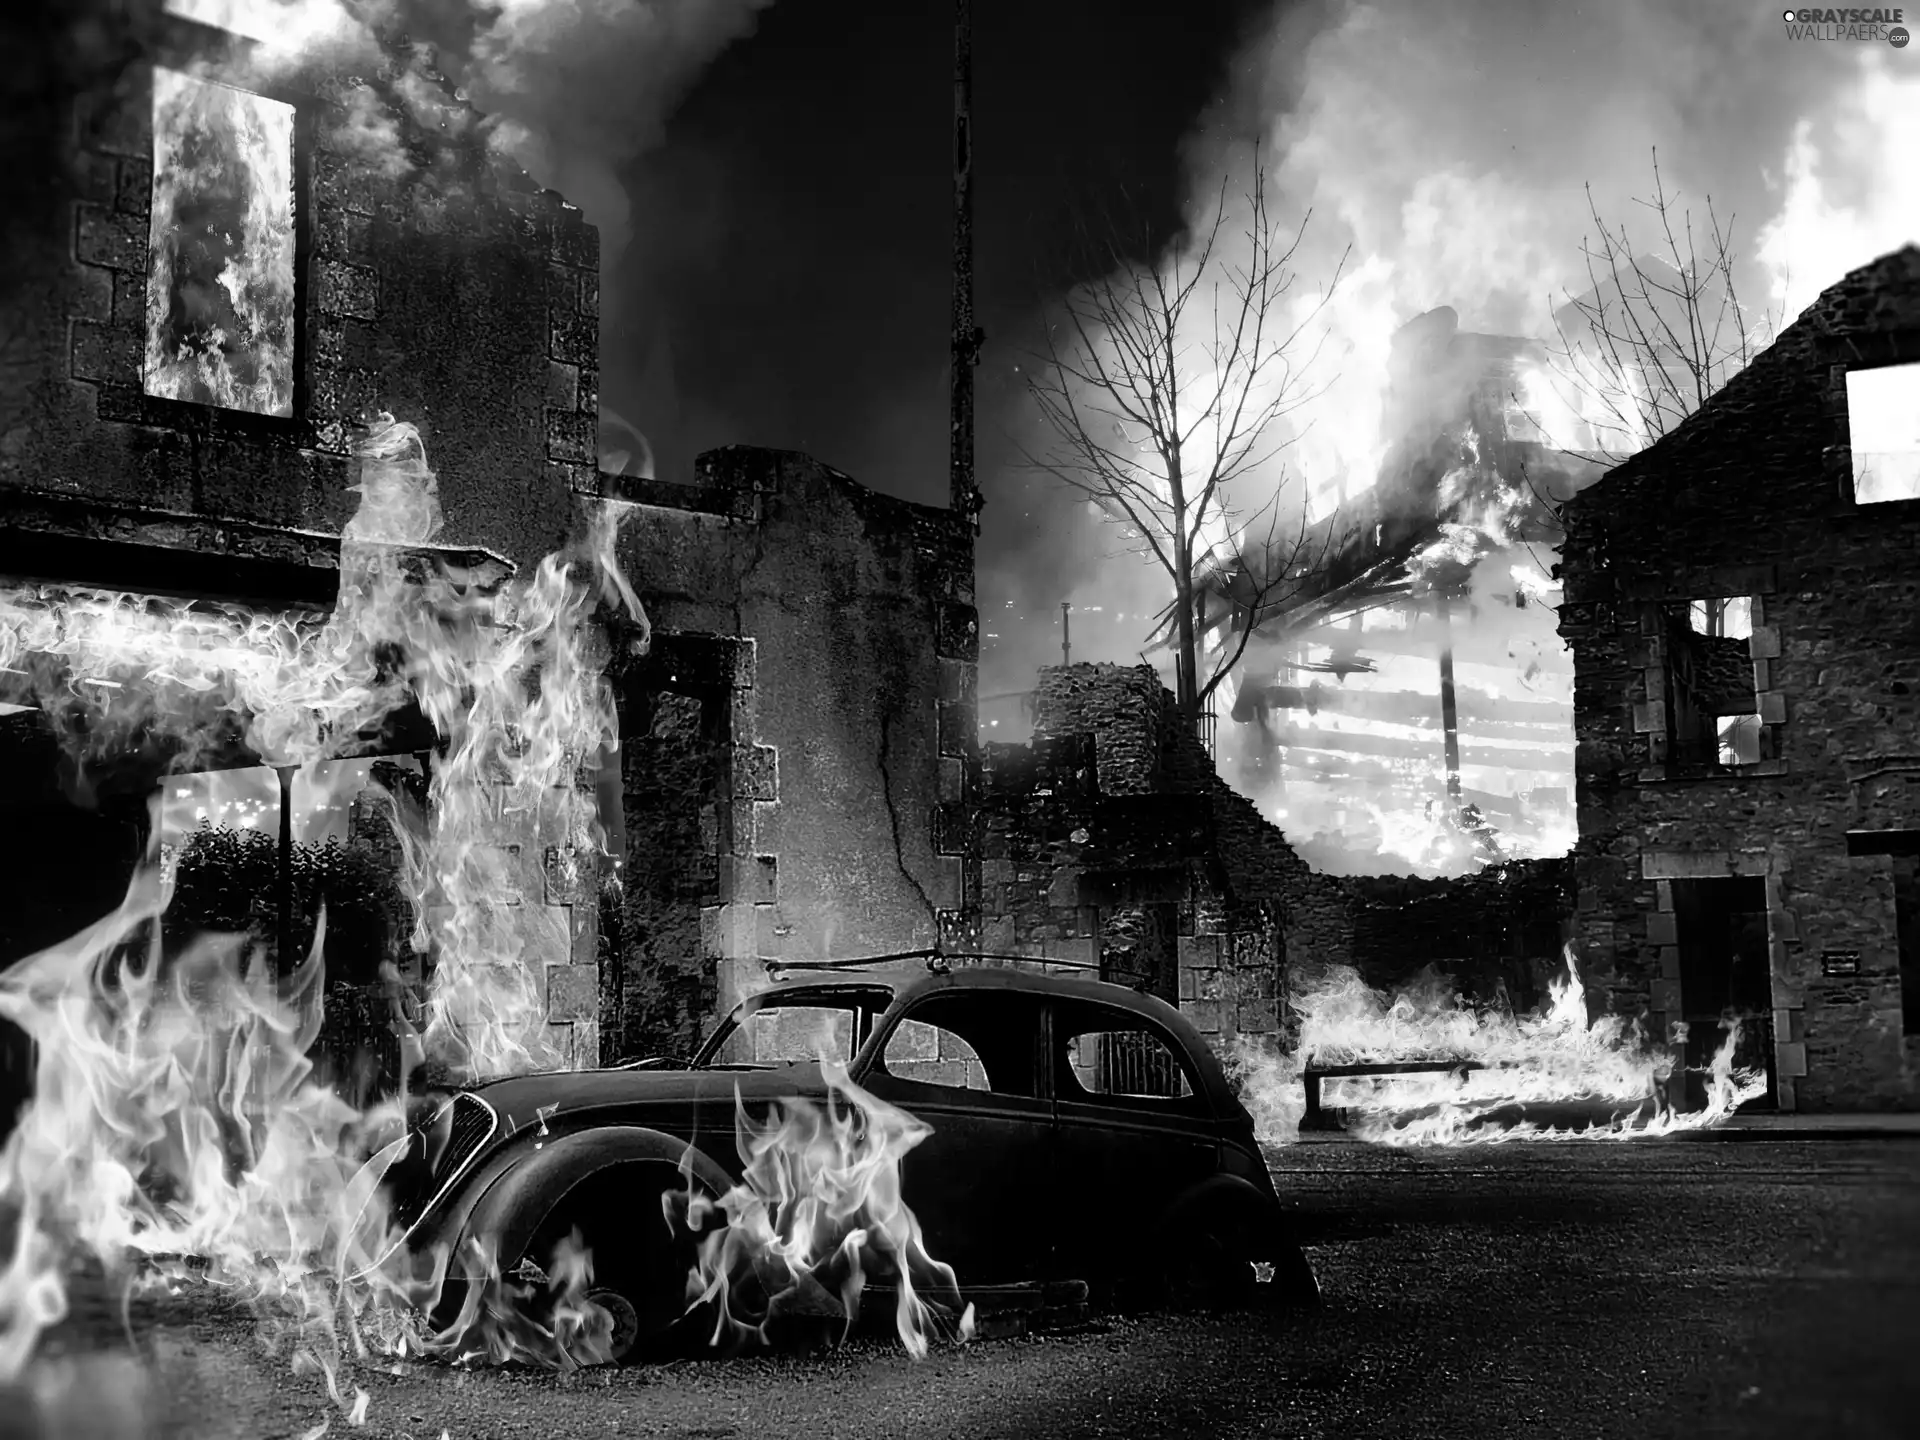 Flames, ruins, Automobile